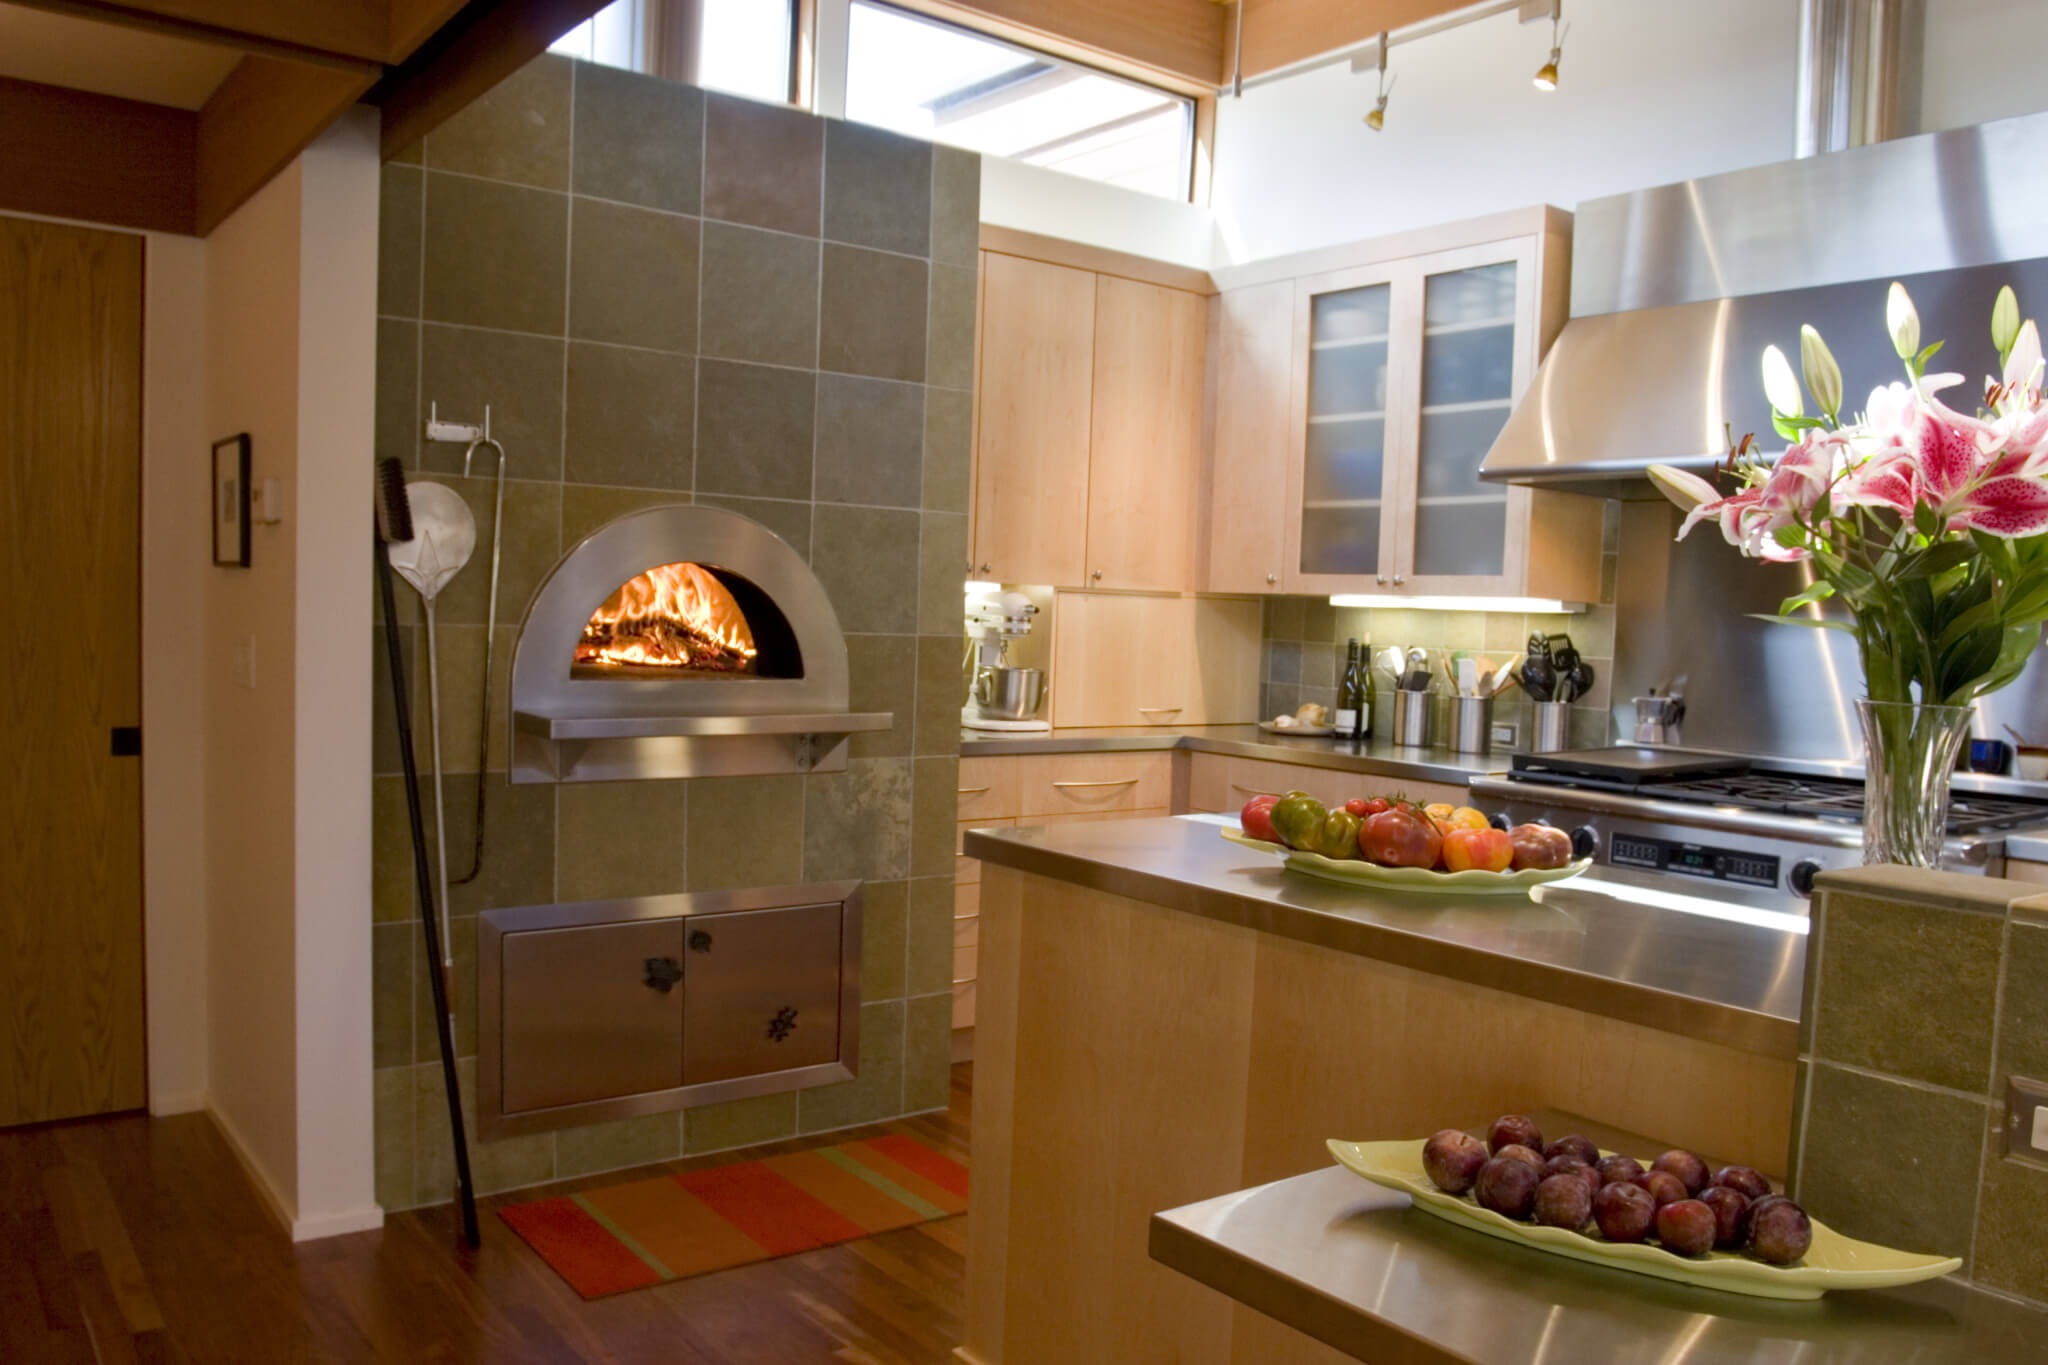 Mugnaini oven in a residential kitchen